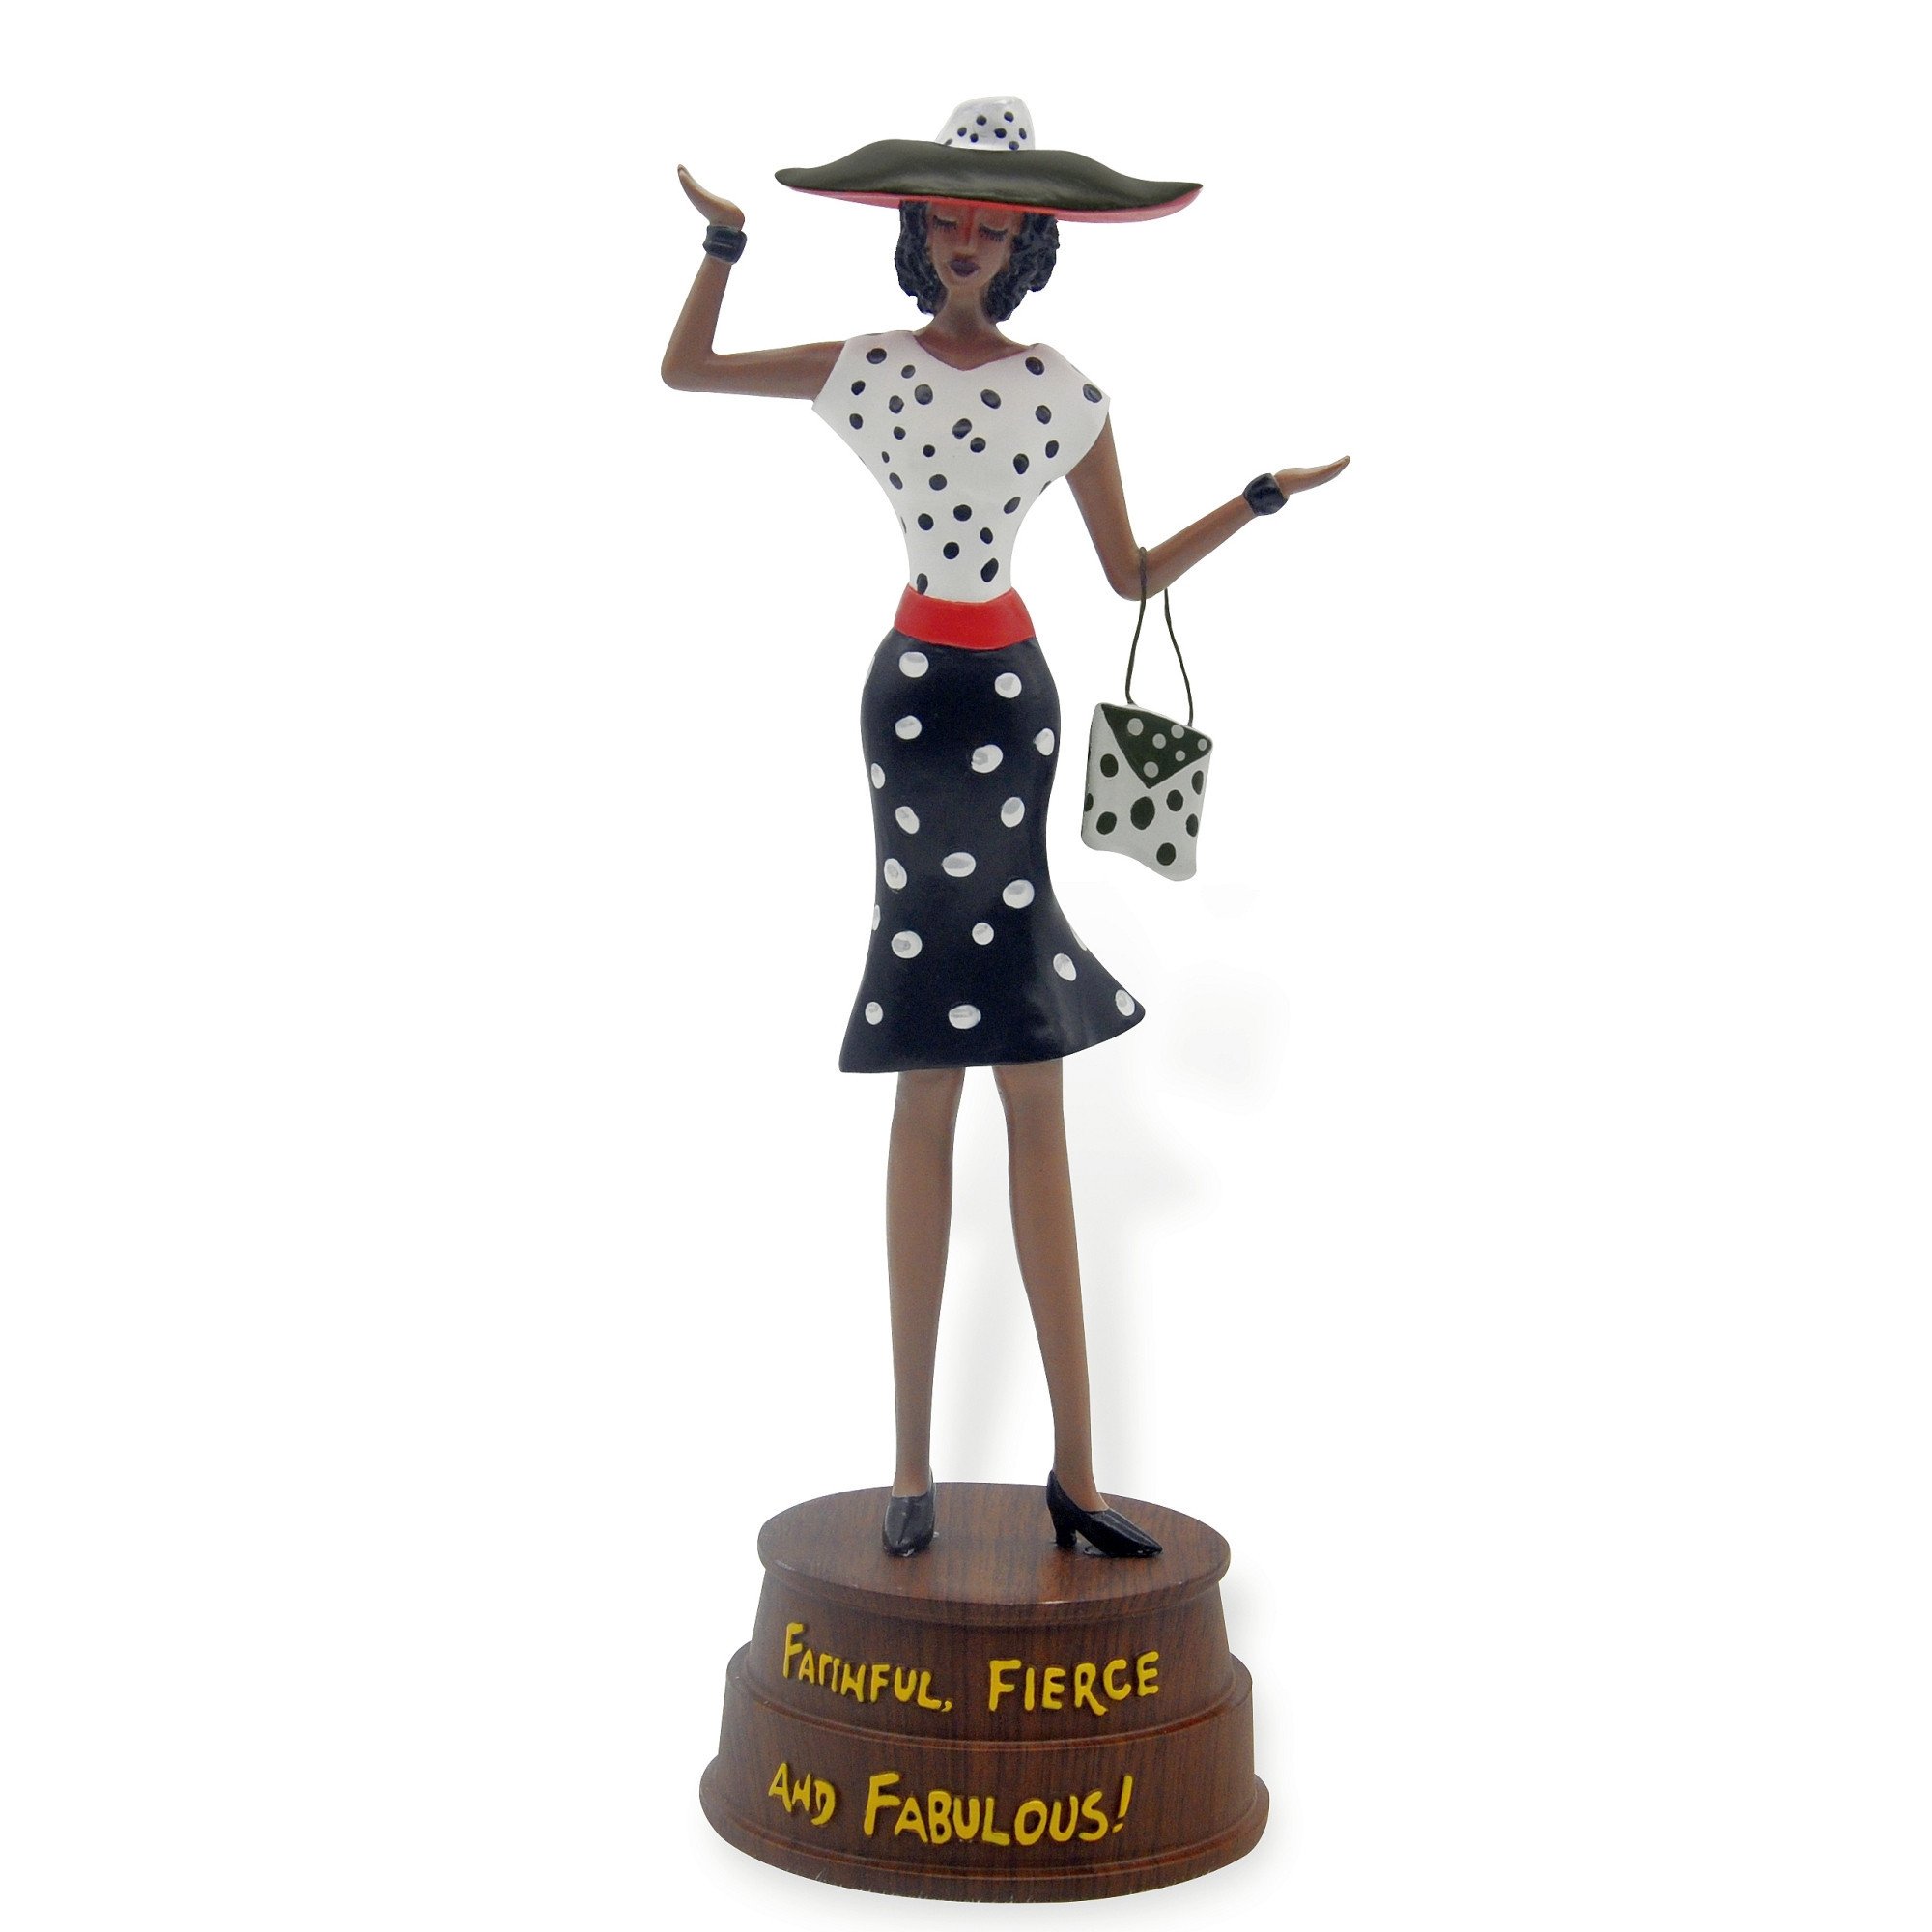 Faithful Fierce And Fabulous African American Figurine